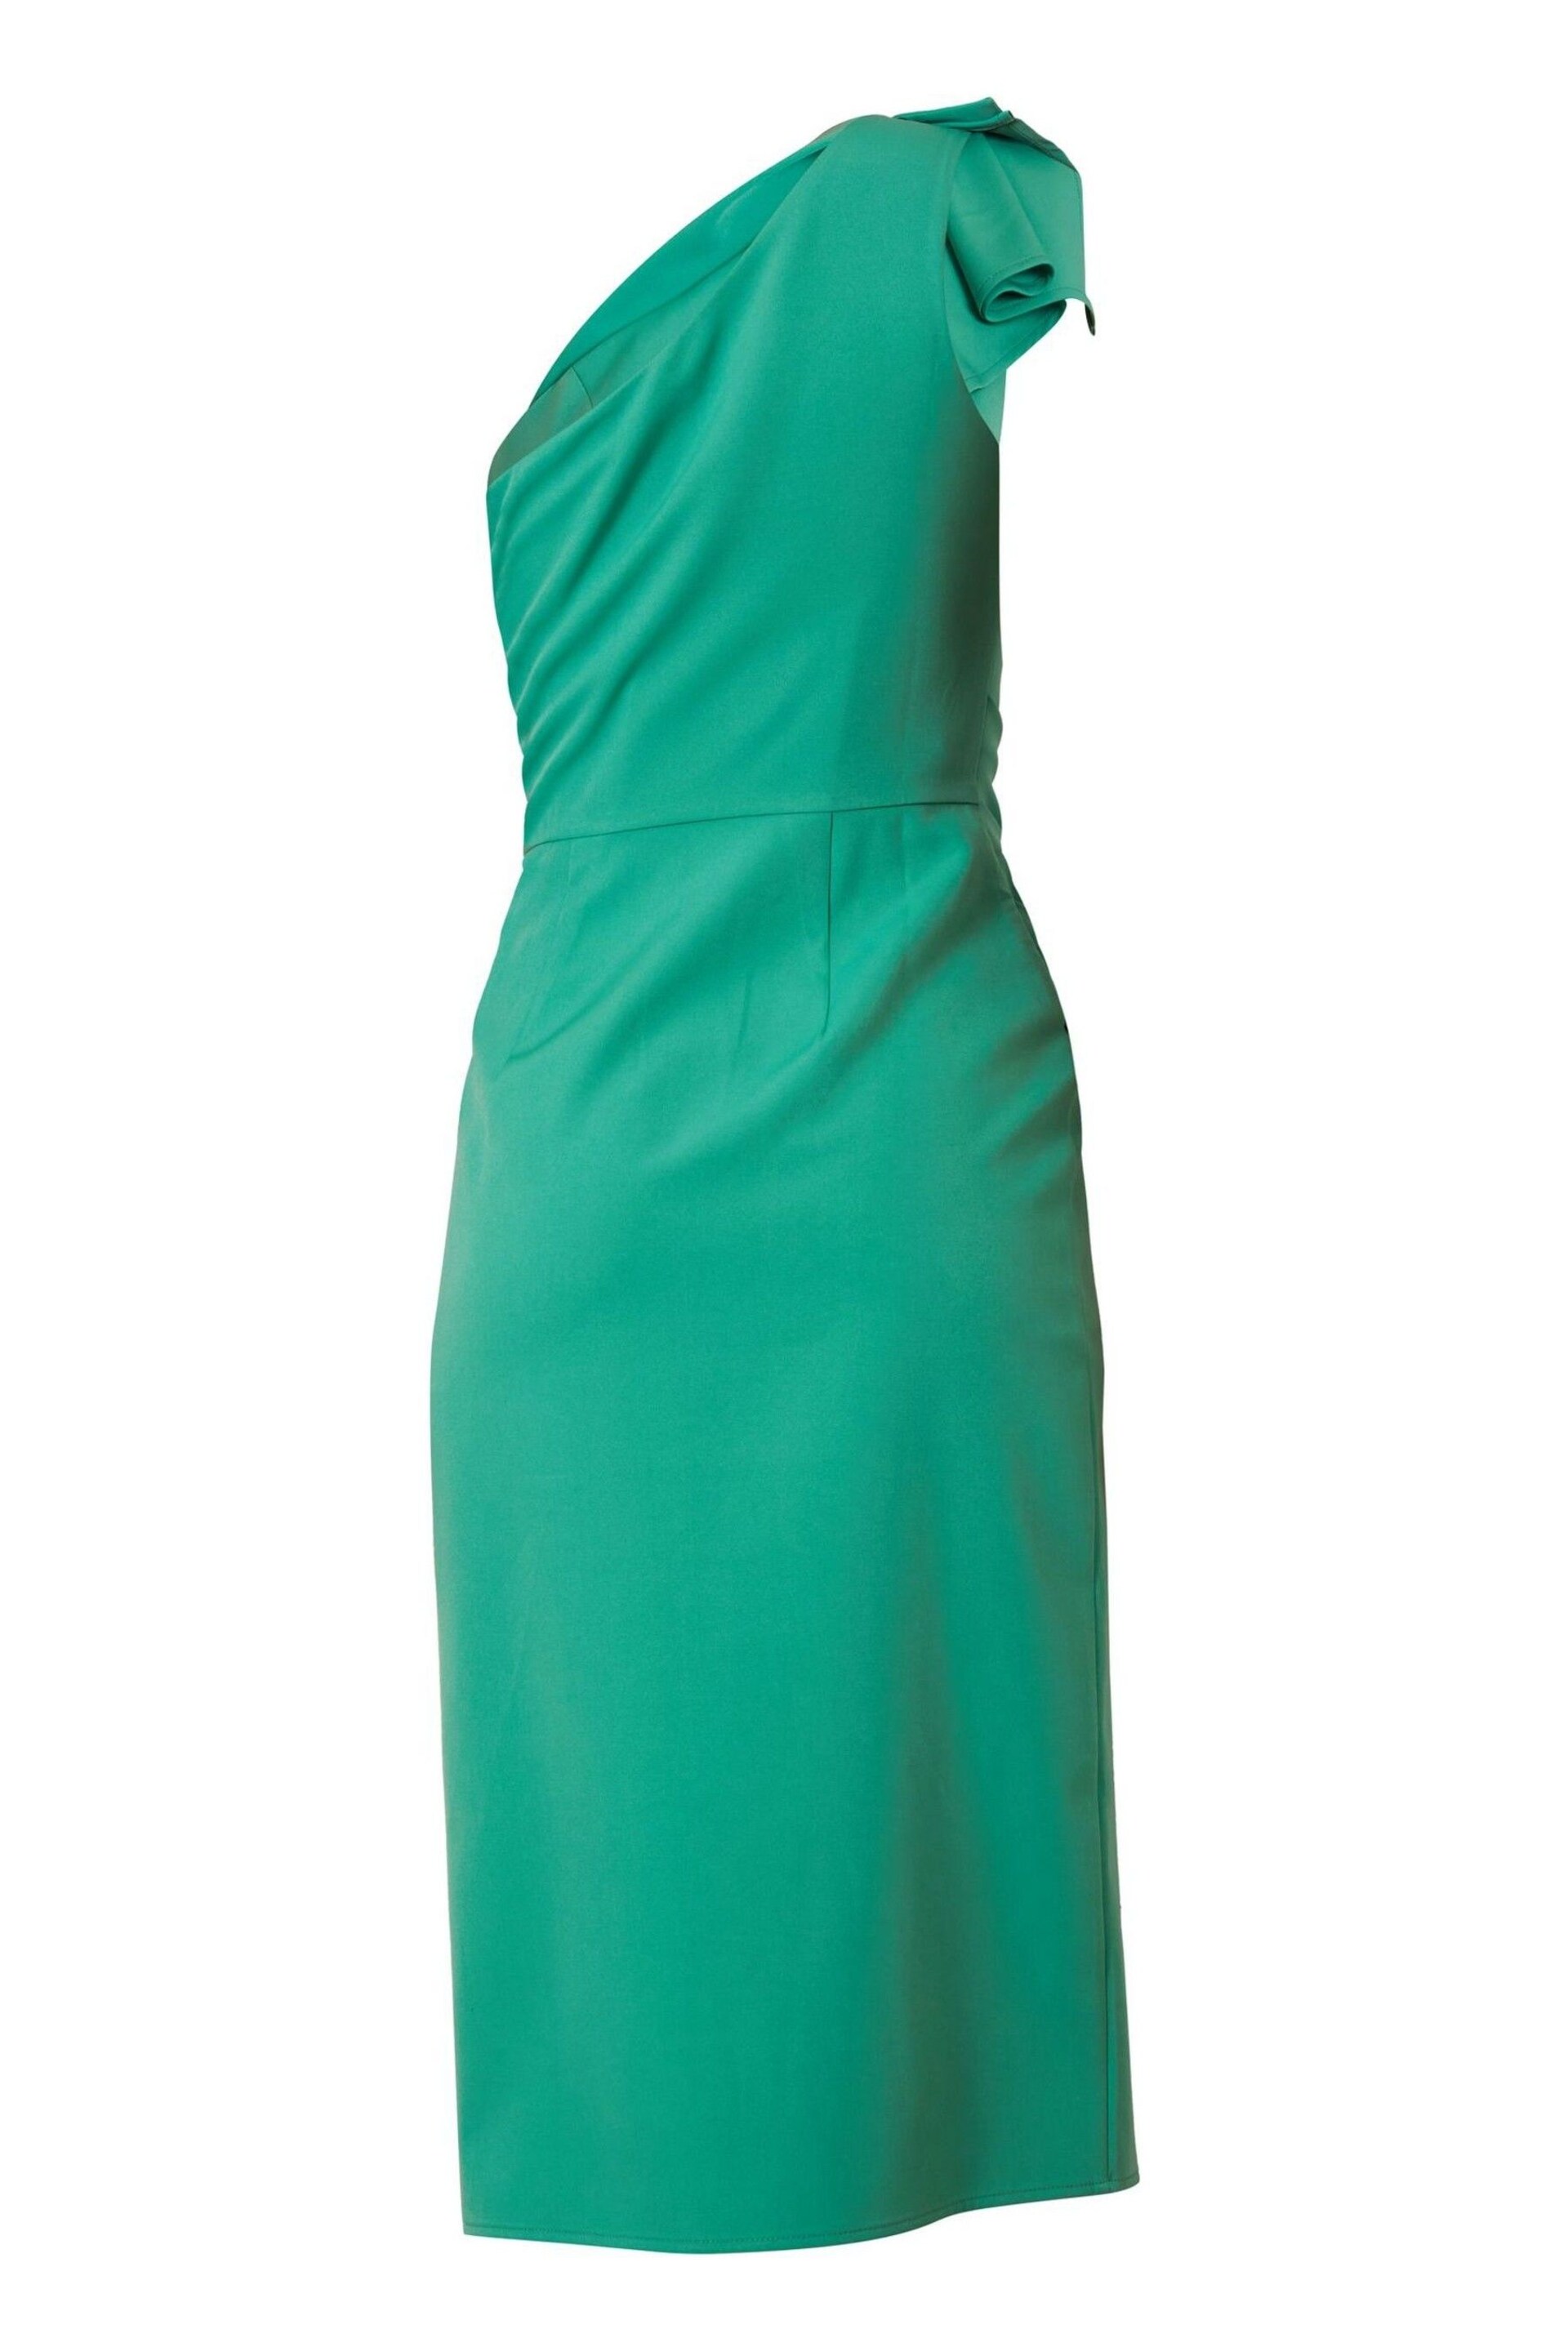 Chi Chi London Green One Shoulder Wrap Detail Midi Dress - Image 6 of 6